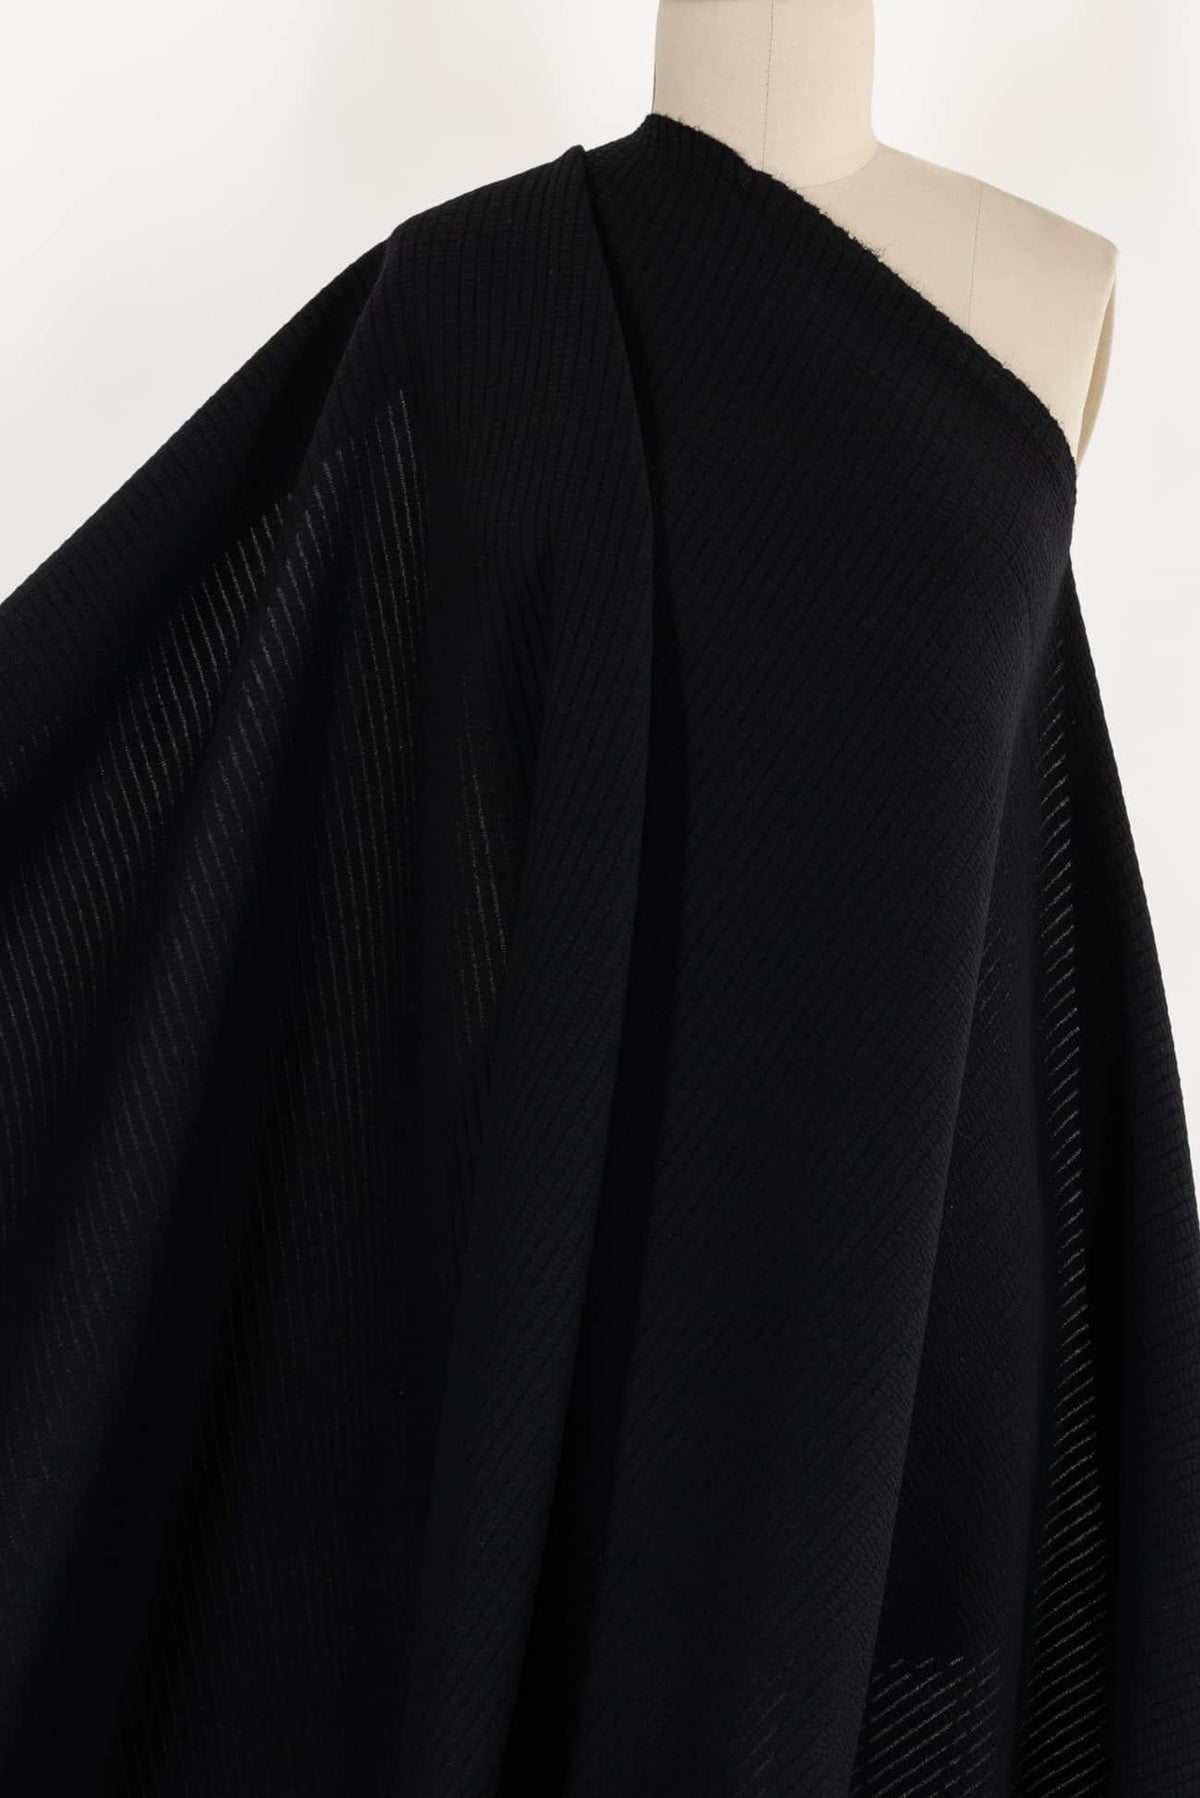 Tarmac Black Knit - Marcy Tilton Fabrics